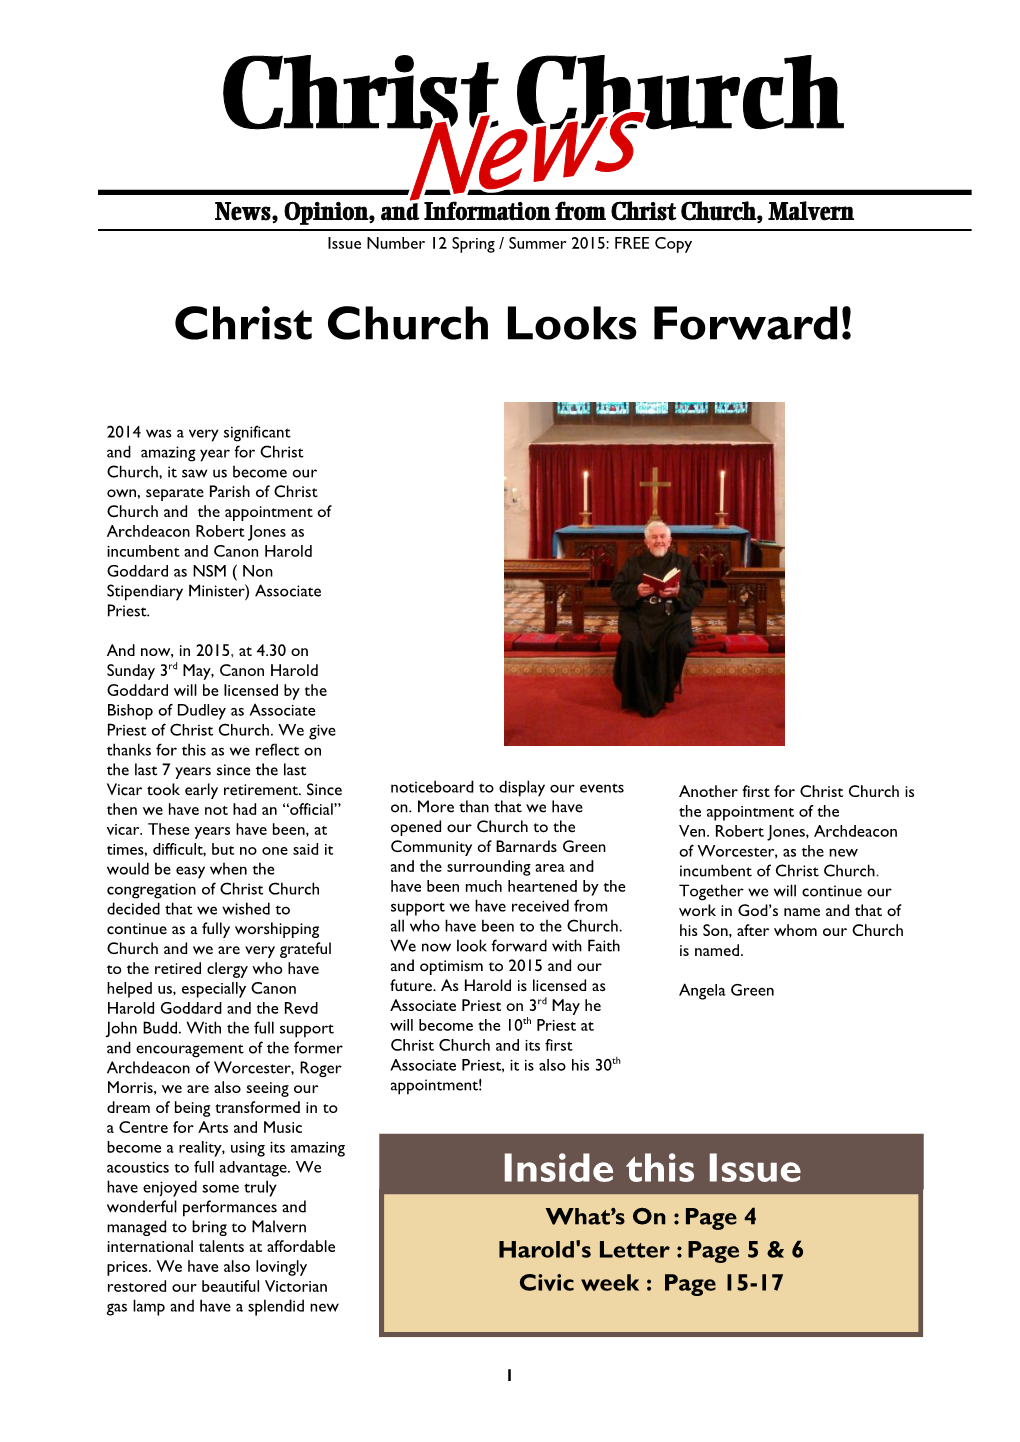 Christ Church Looks Forward!